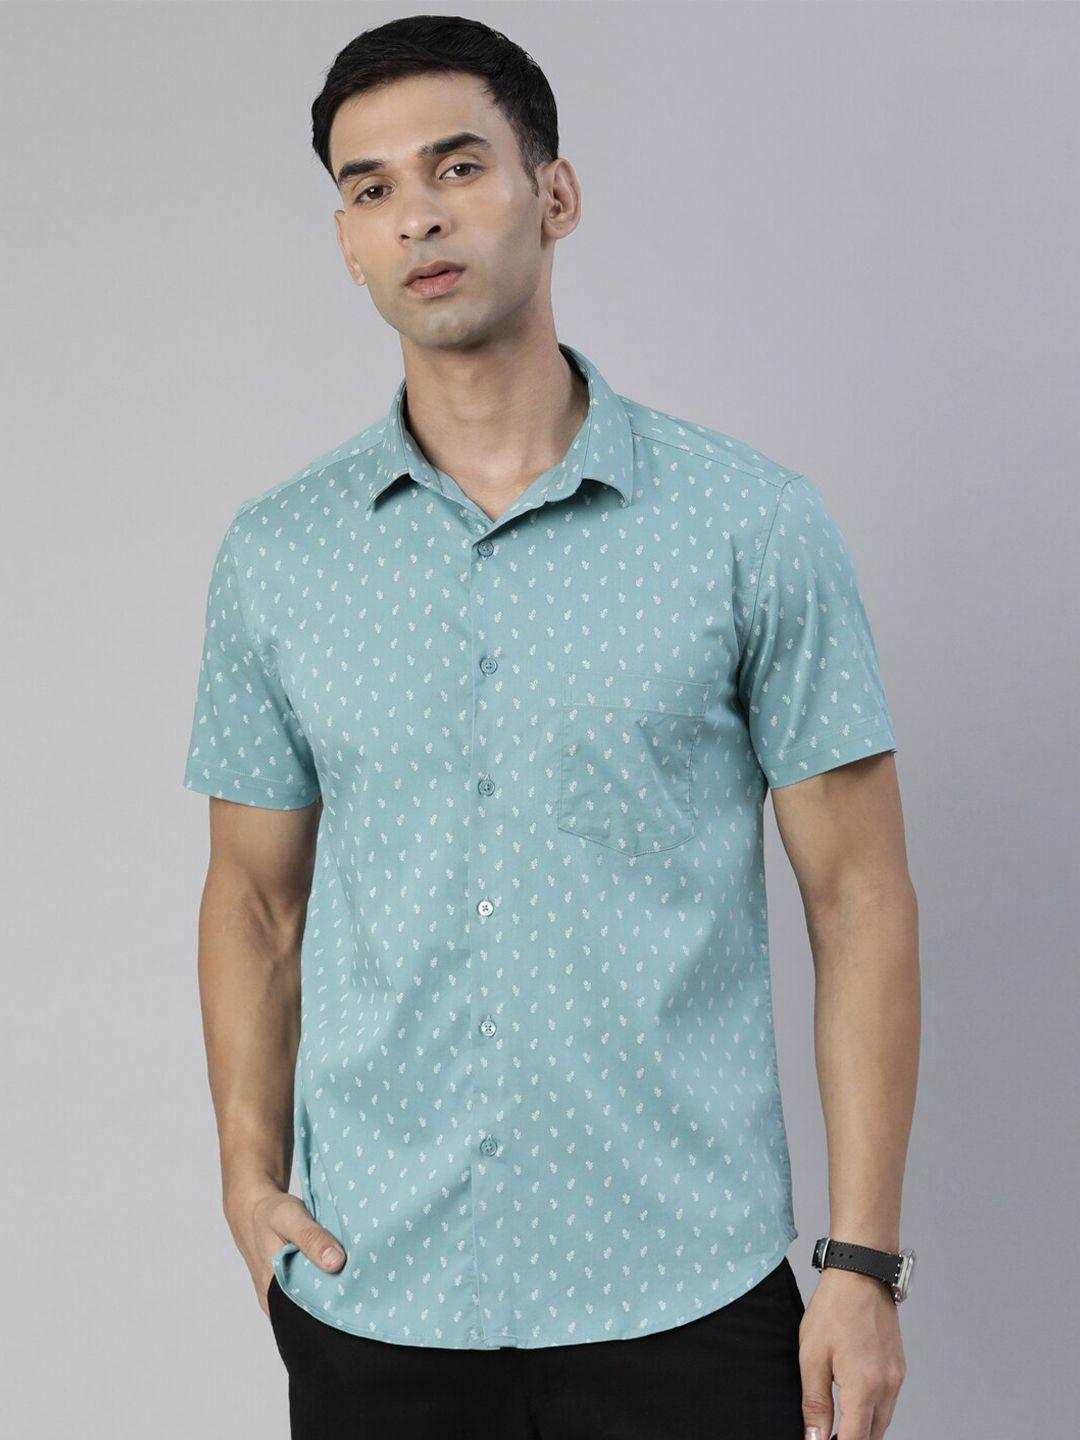 bushirt comfort micro ditsy printed pure cotton casual shirt